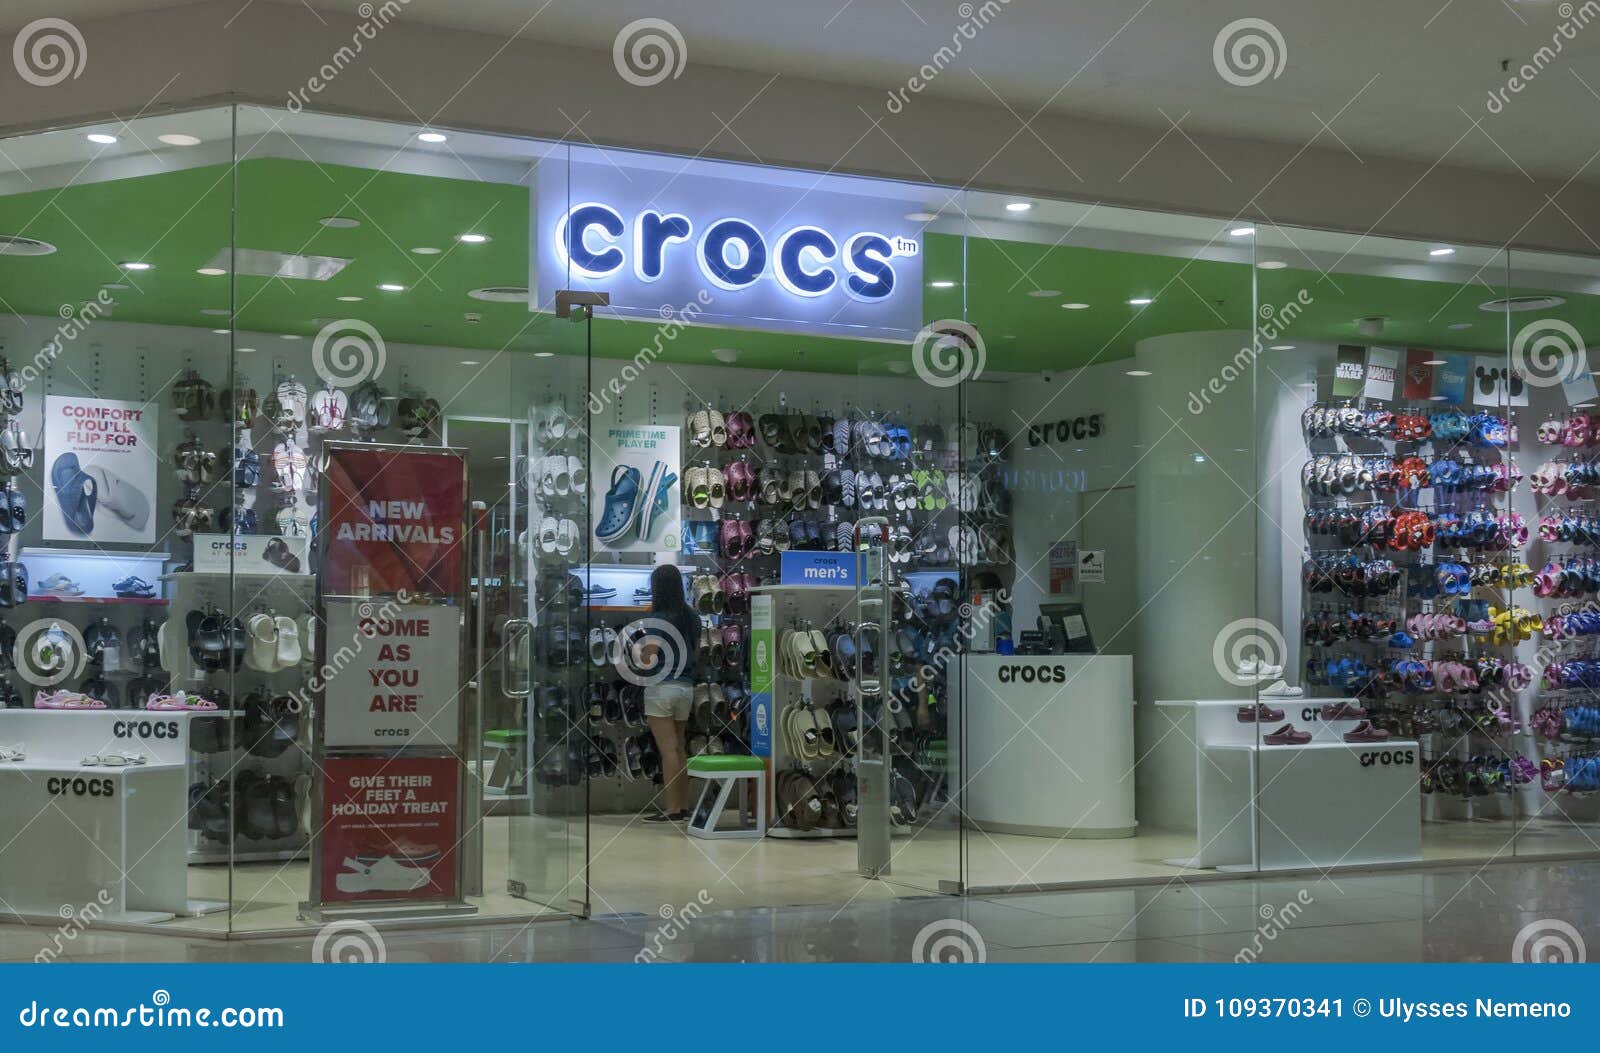 crocs in city centre